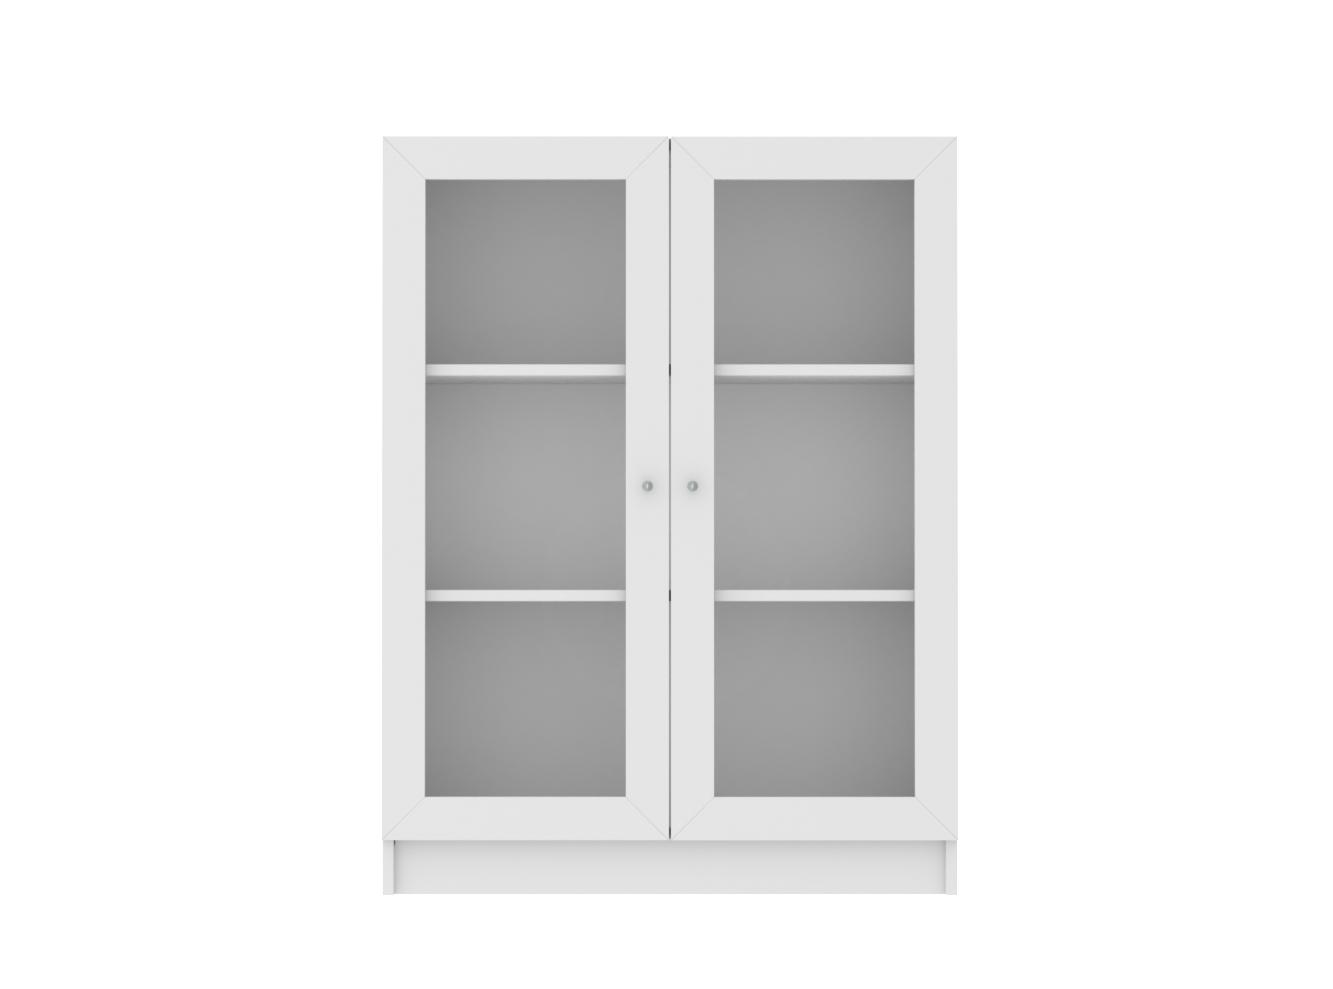  Книжный шкаф Билли 419 white ИКЕА (IKEA) изображение товара